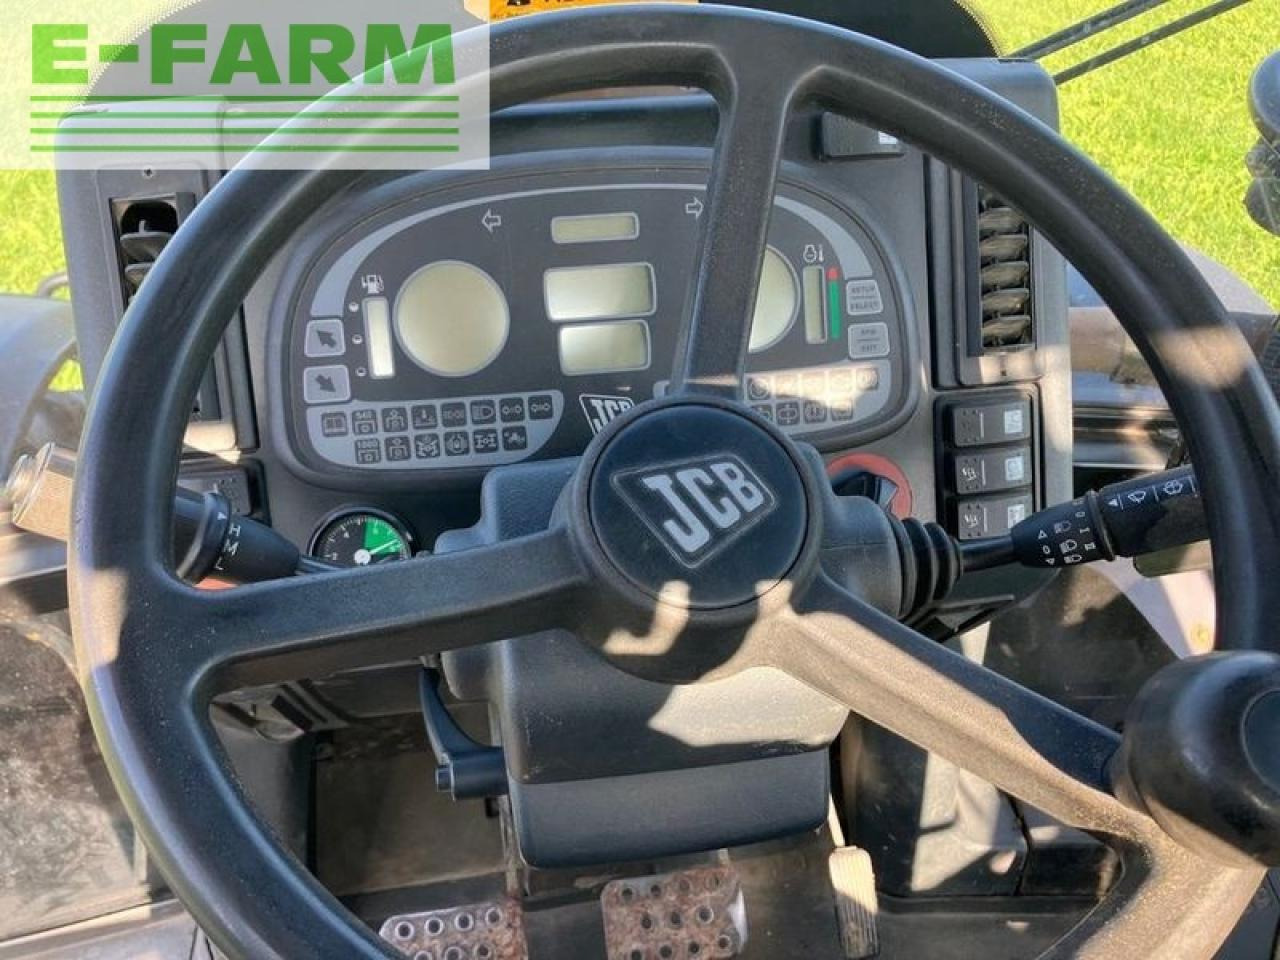 Farm tractor JCB fastrac 2155 4ws traktor gelegenheit: picture 13